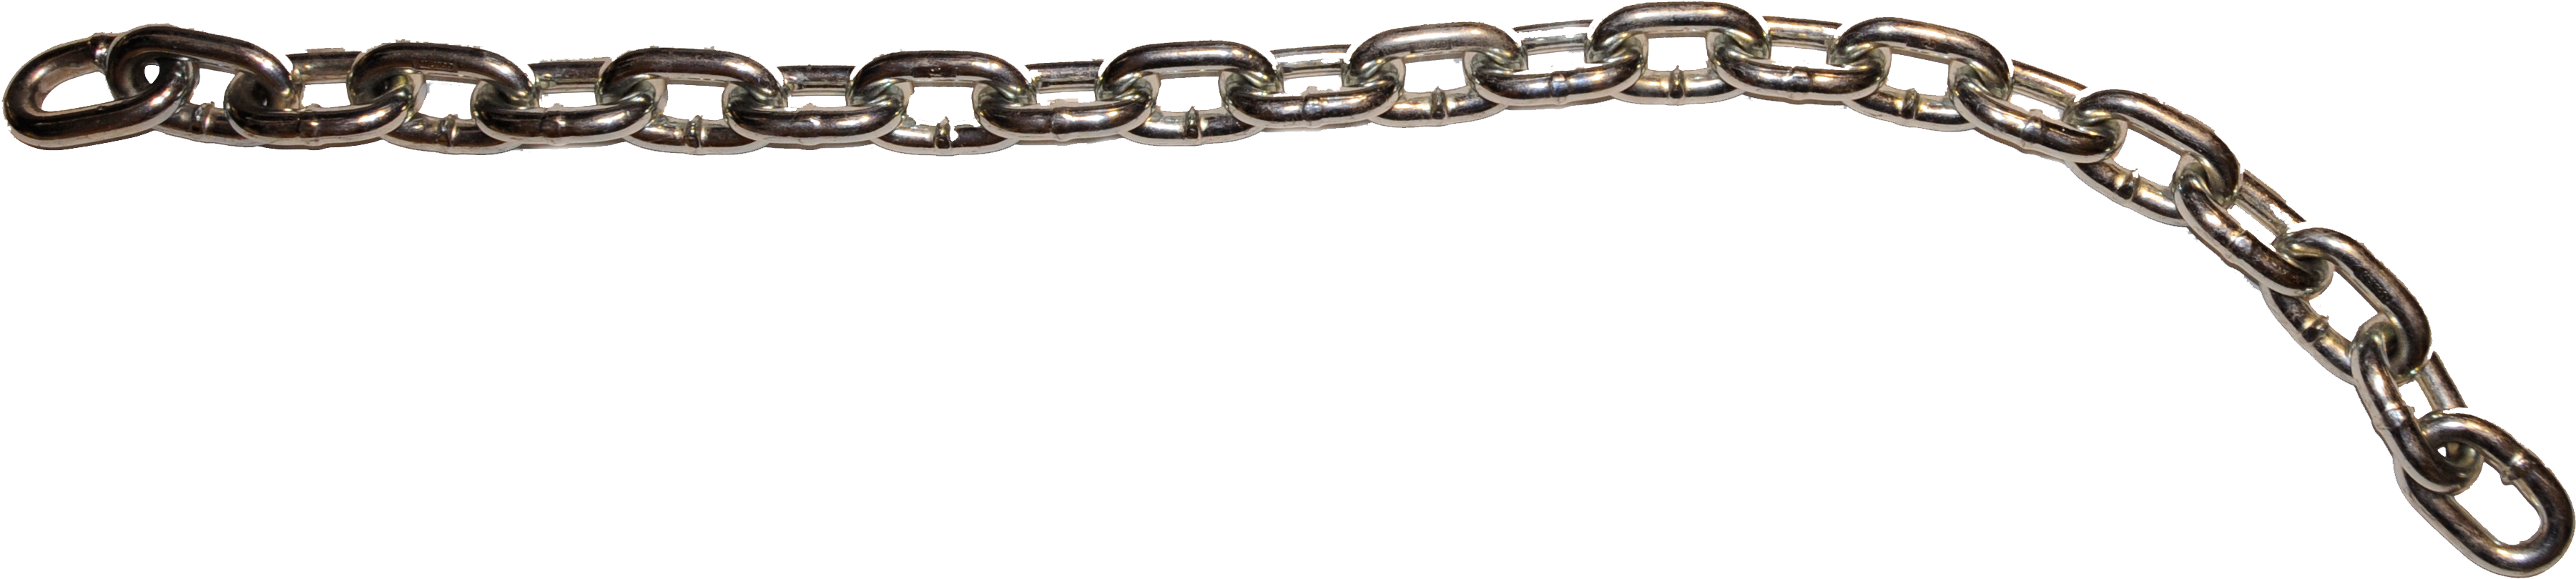 Metal Chain Link Segment PNG image